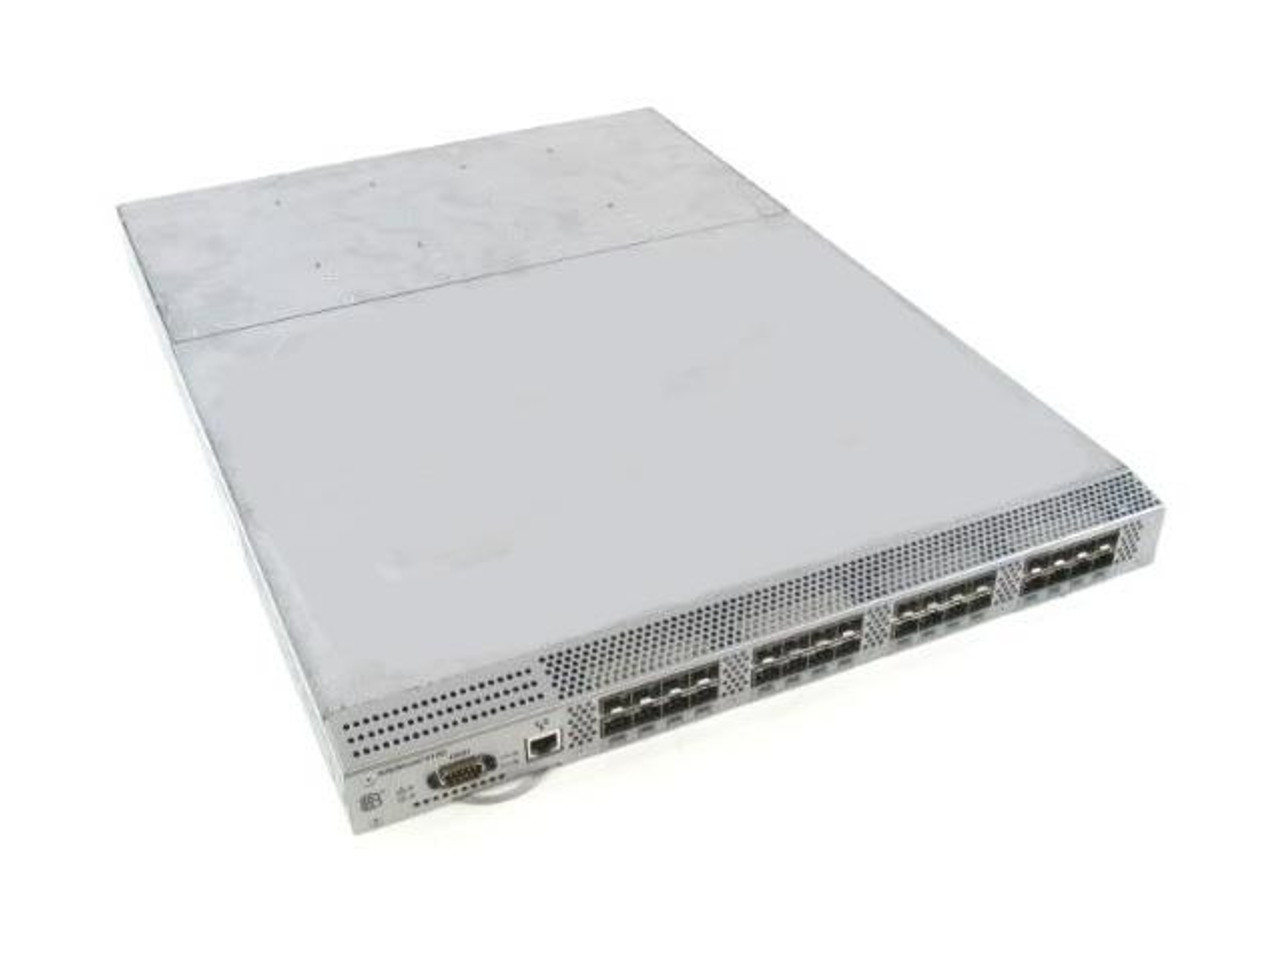 BR-4120-0001 Brocade 4GB 16-Ports Fiber Switch (Refurbished)